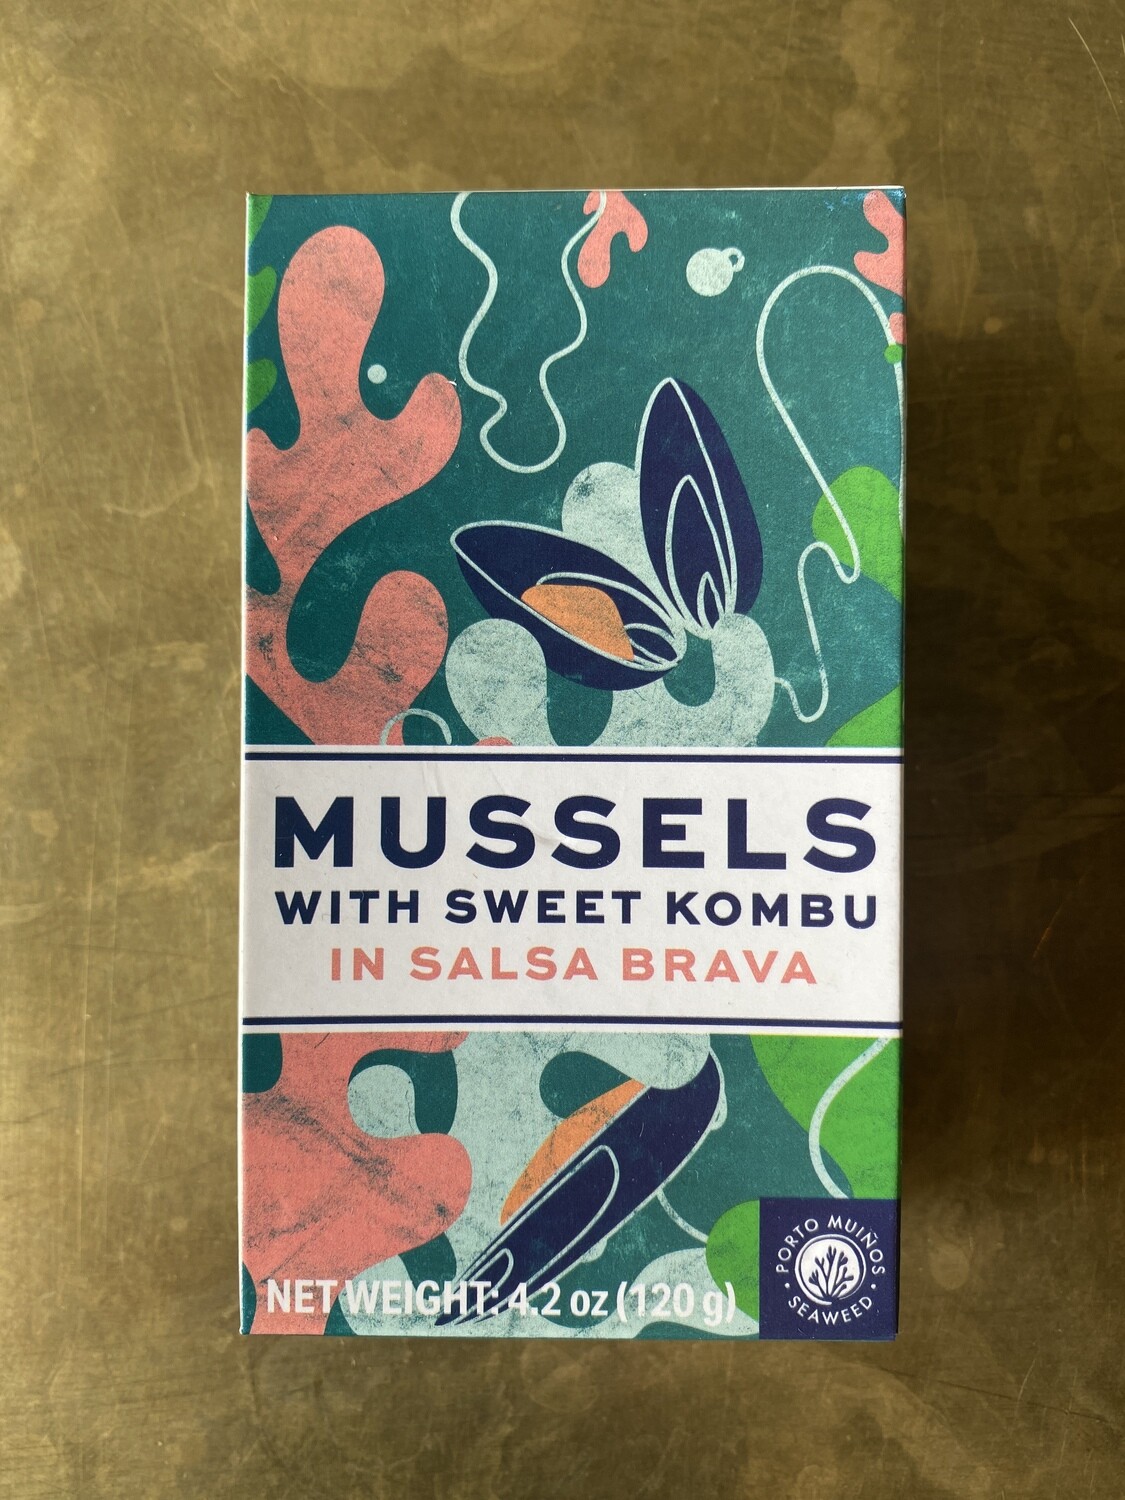 Porto Muinos Mussels with Sweet Kombu